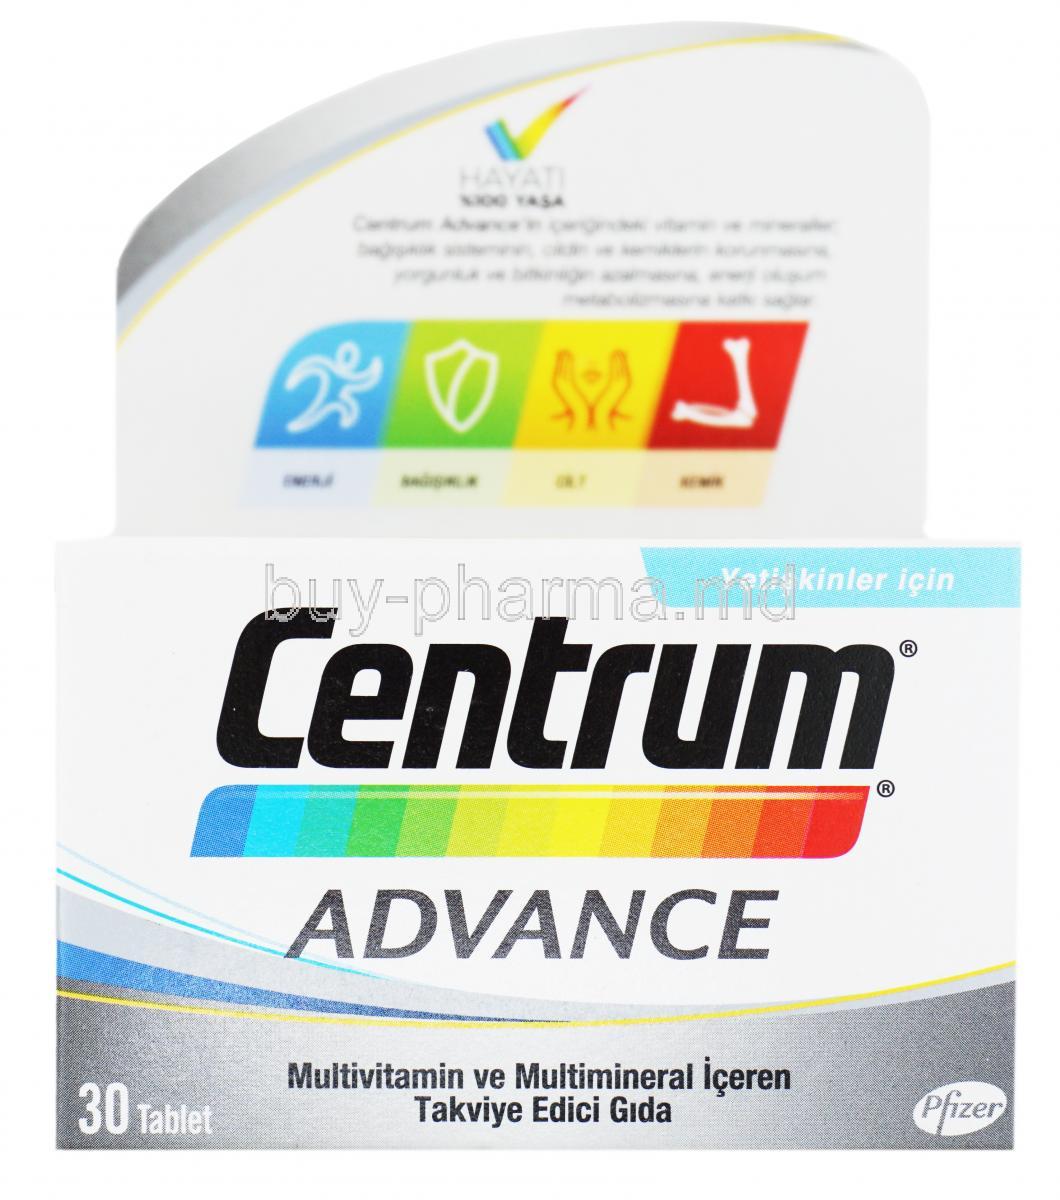 Centrum Advance, multivitamins and multiminerals, box